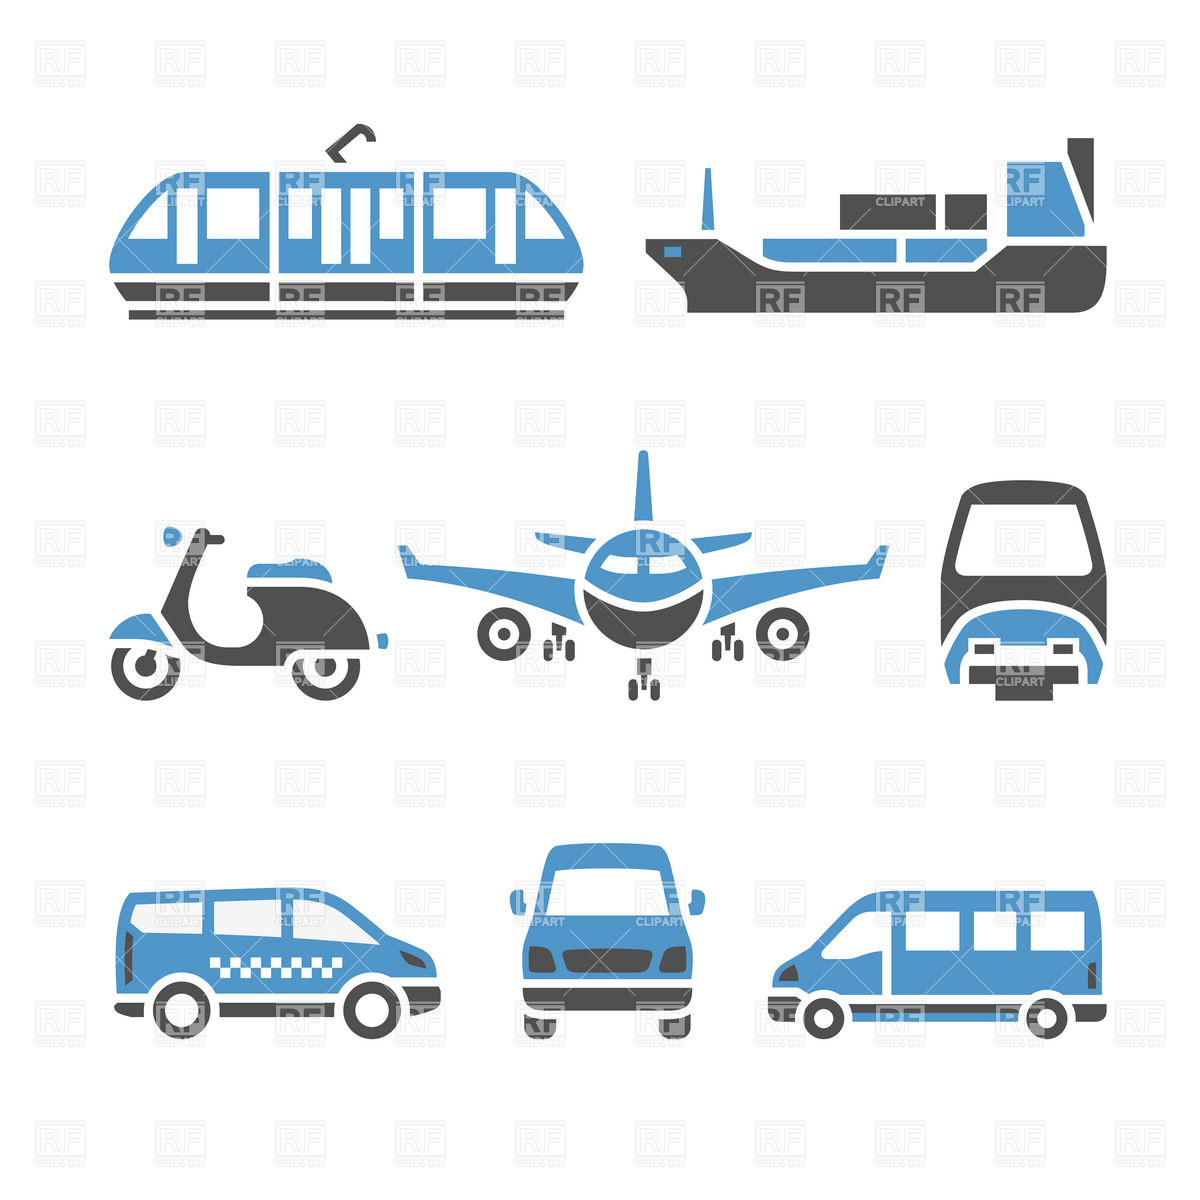 Clipart Catalog Transportation Transportation Facilities Icons Travel